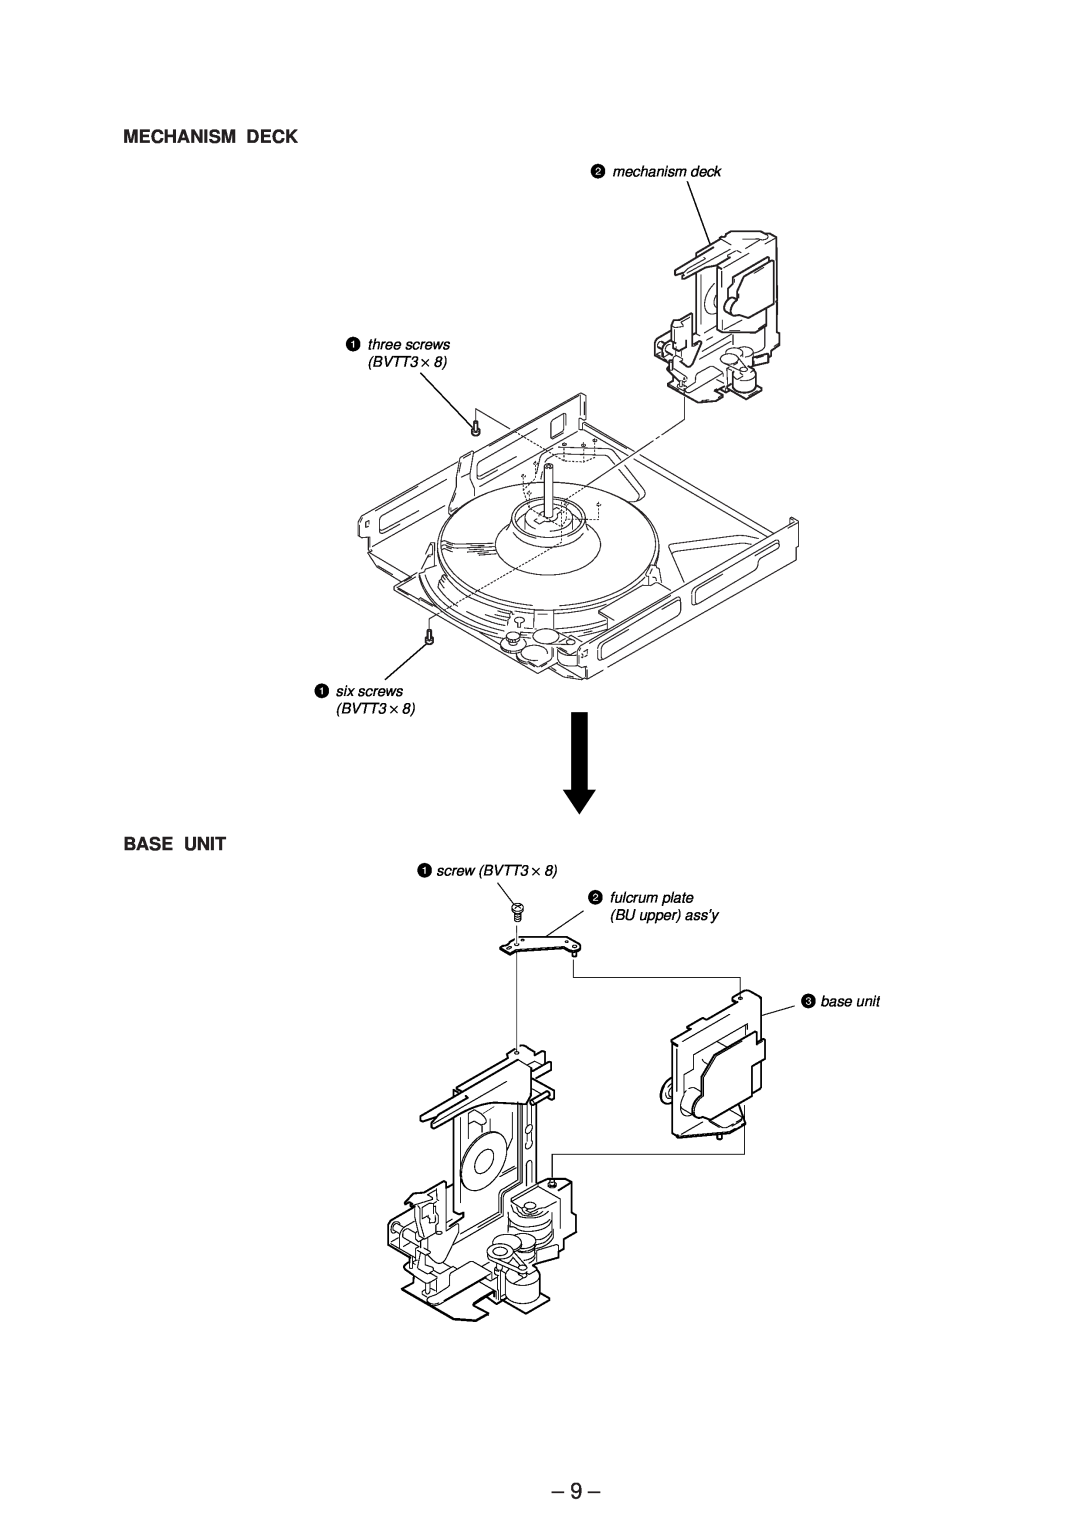 Sony Ericsson CDP-CX220 service manual mechanism deck 1 three screws BVTT3 ×, 1six screws BVTT3 ×, base unit 